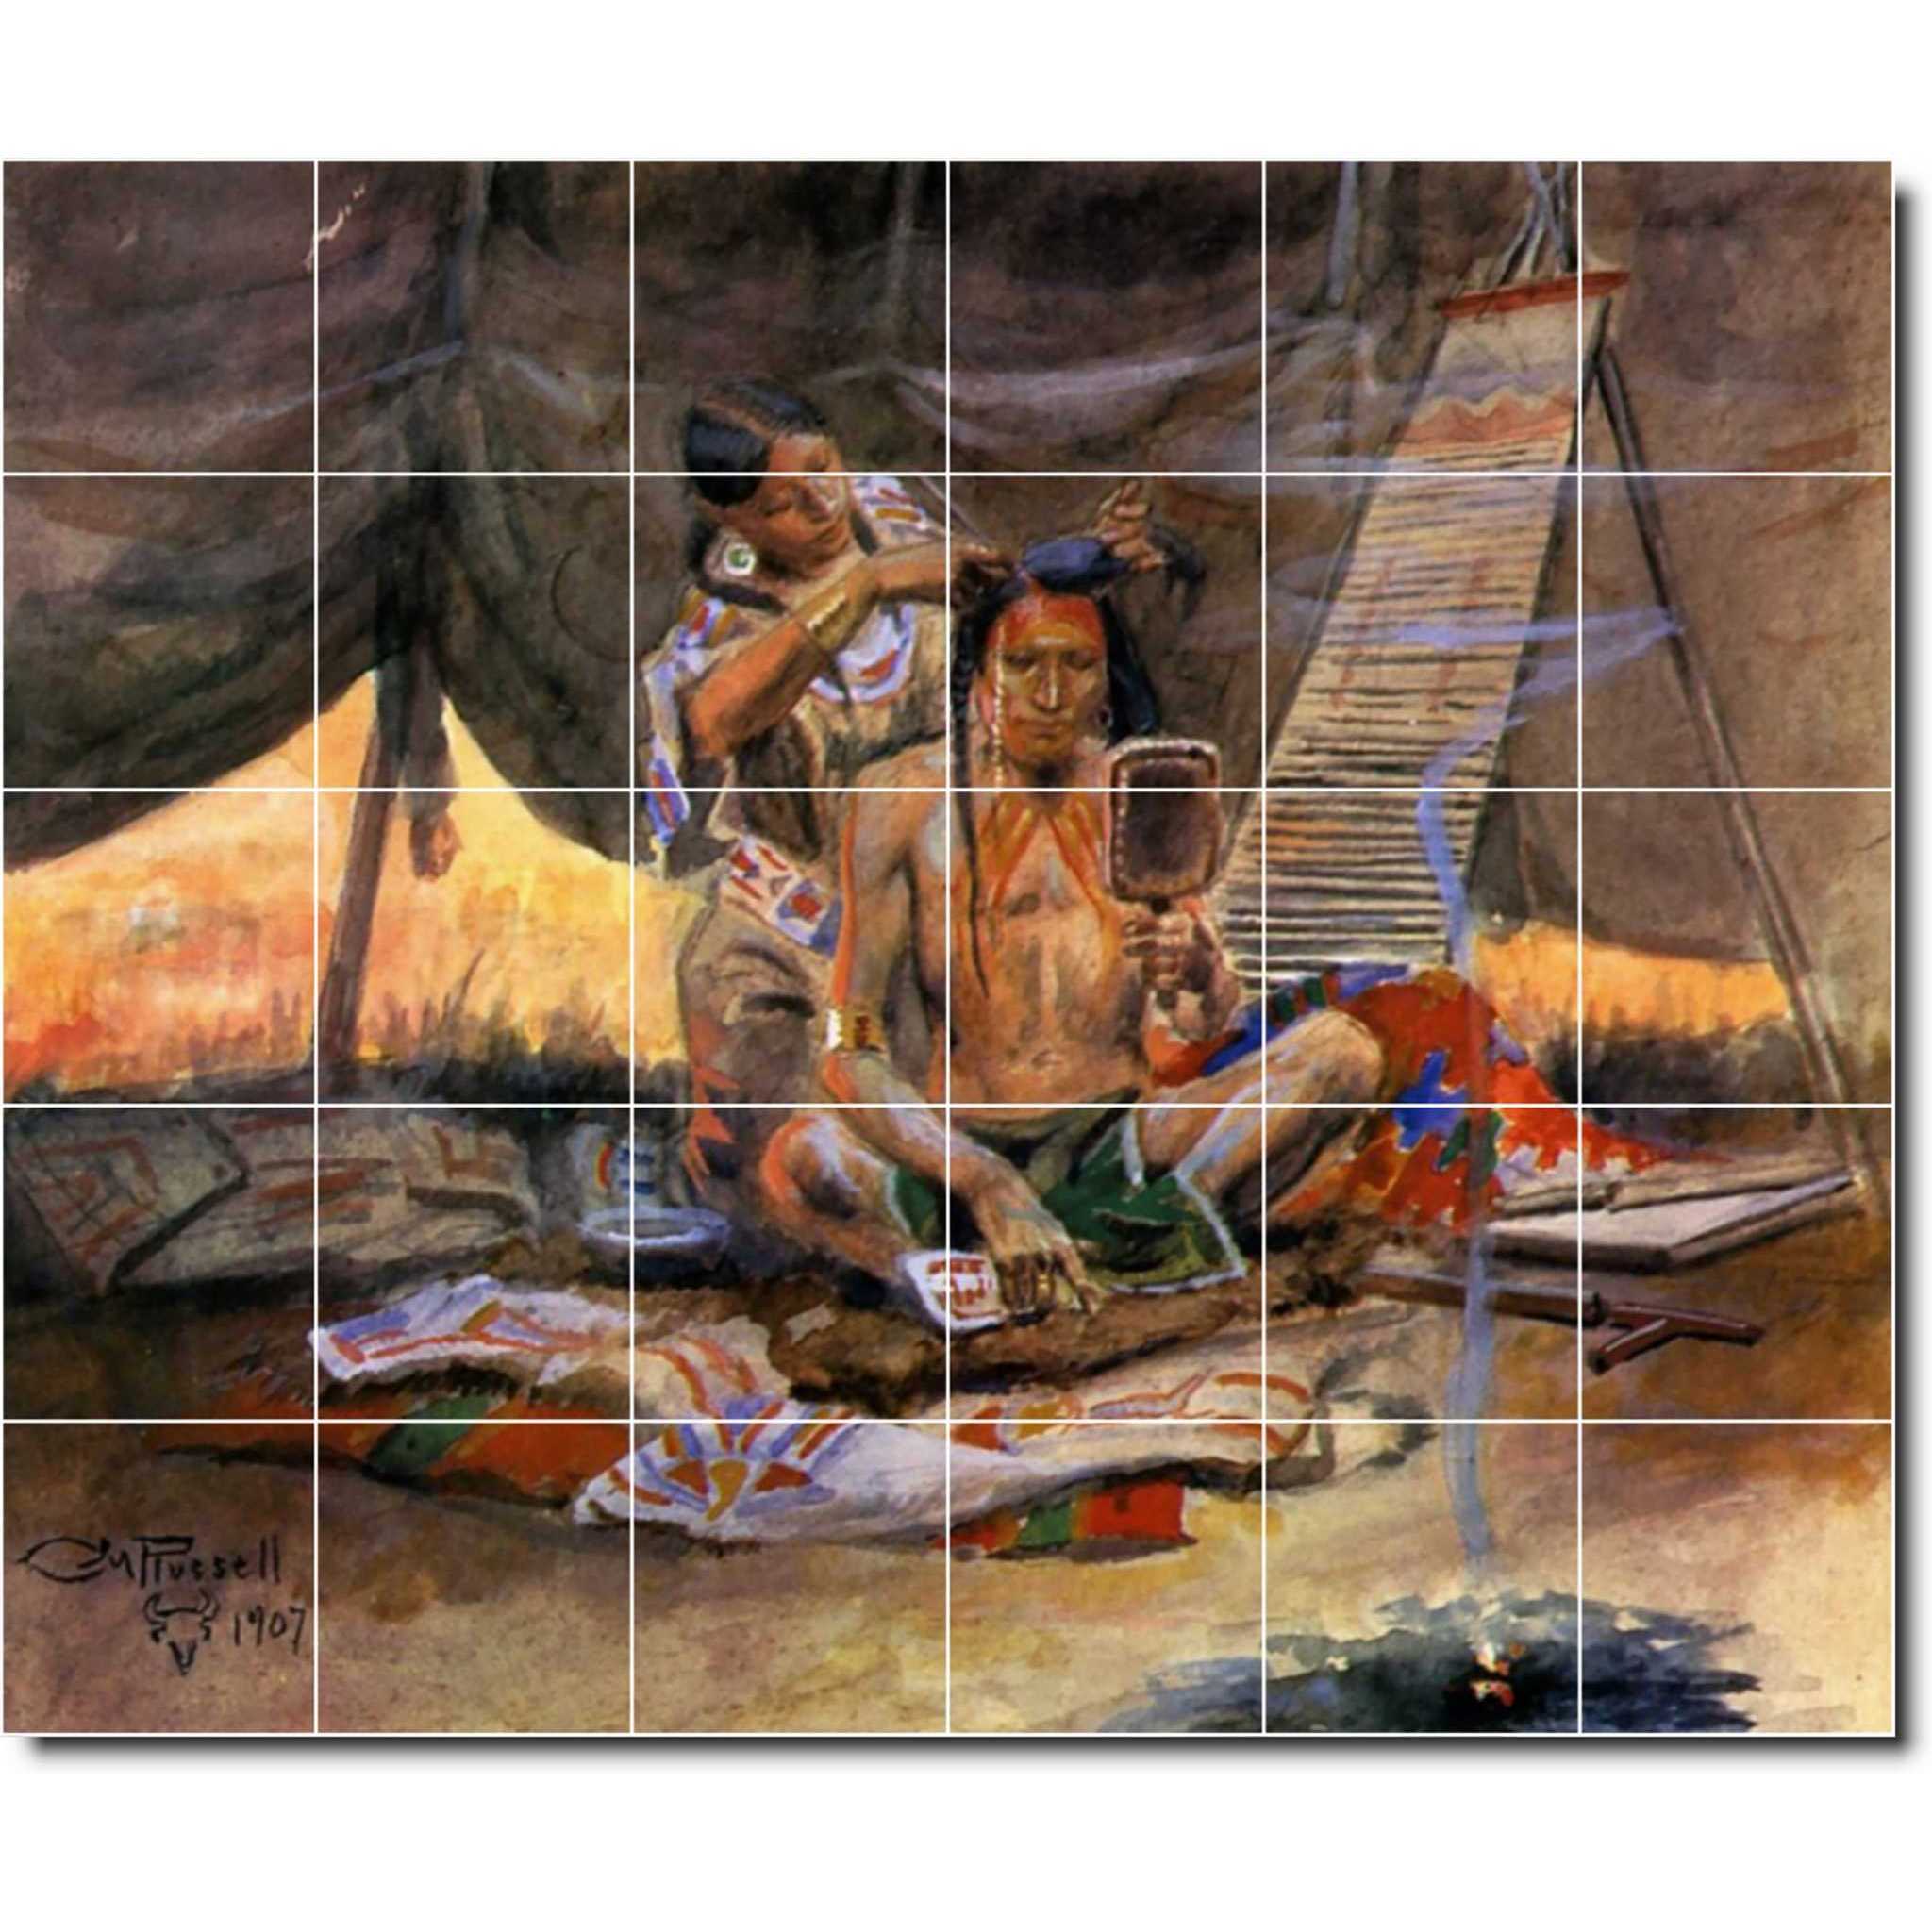 charles russell native american painting ceramic tile mural p07754